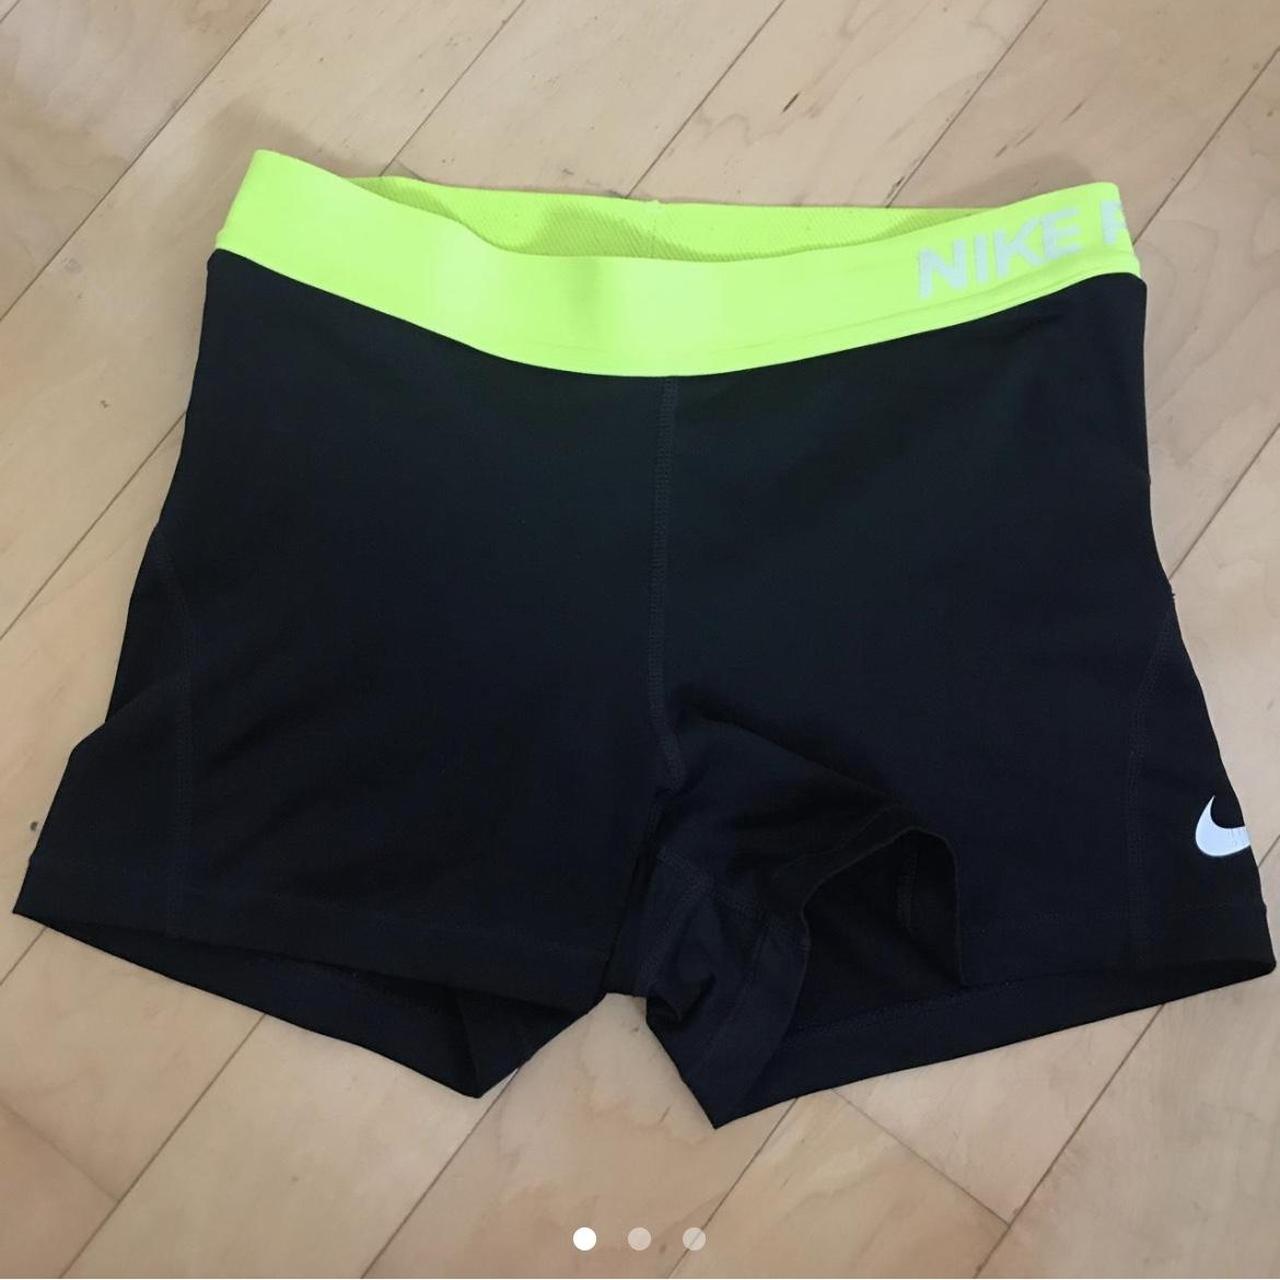 Nike Pro Neon yellow spandex shorts - Perfect... Depop